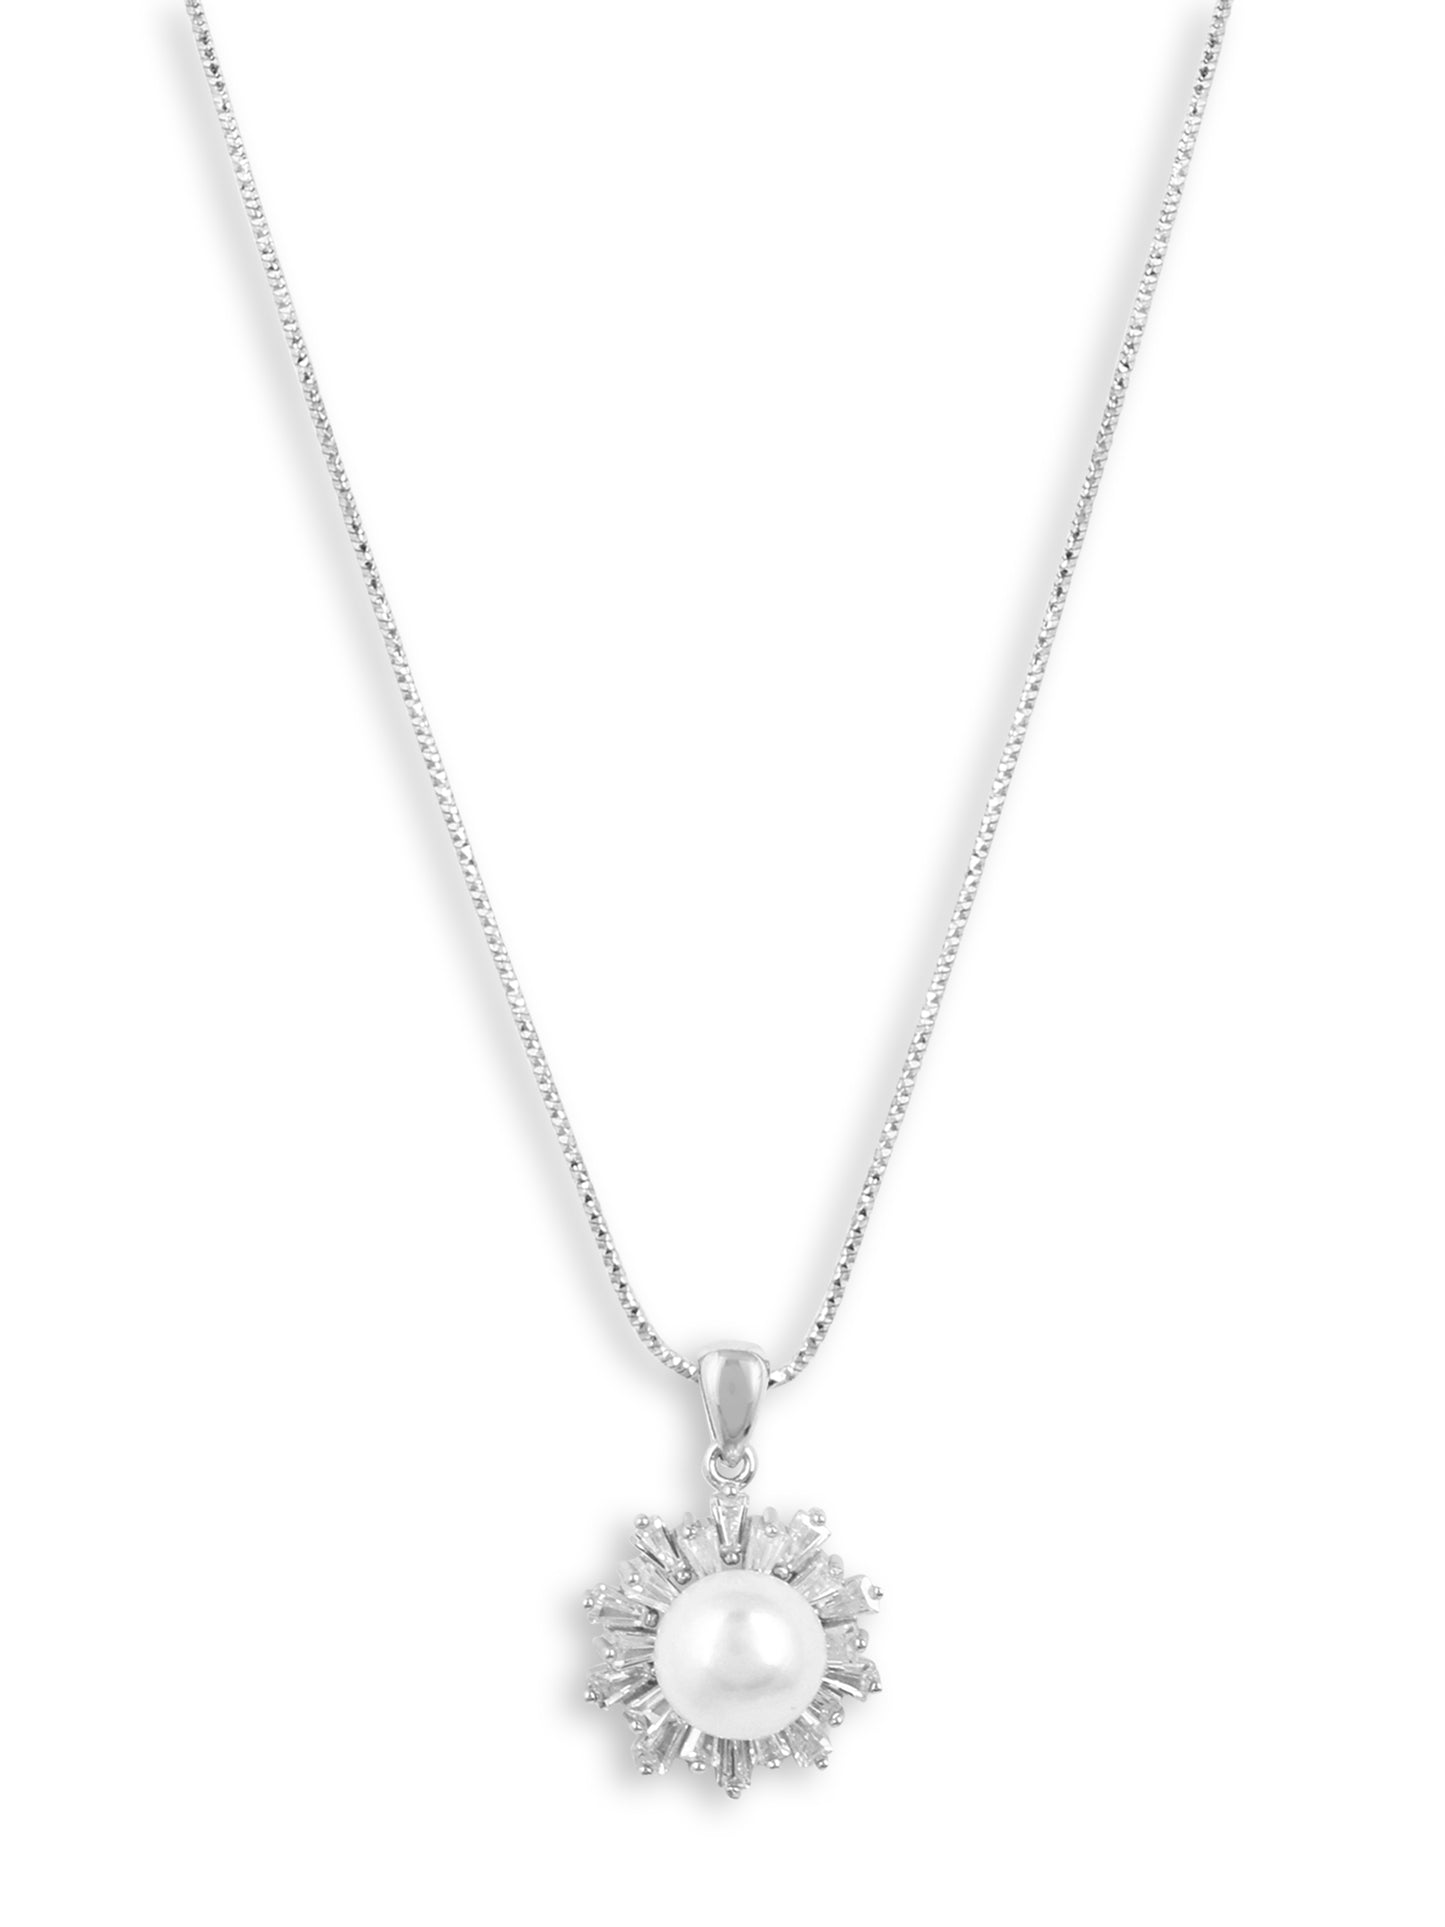 Pearl flower pendant set